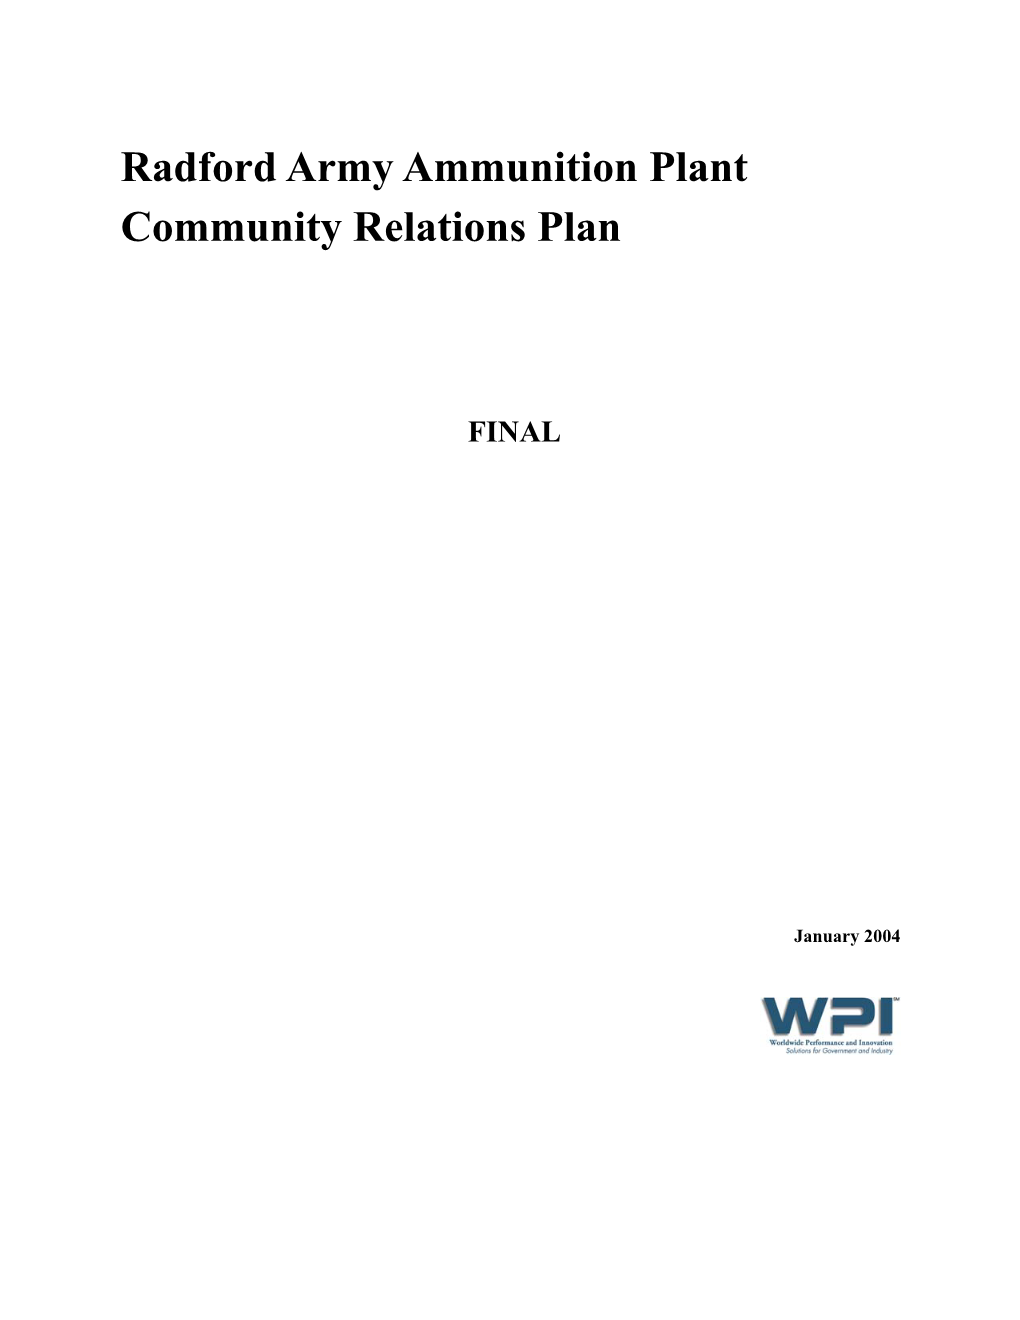 Radford Army Ammunition Plant Community Relations Plan